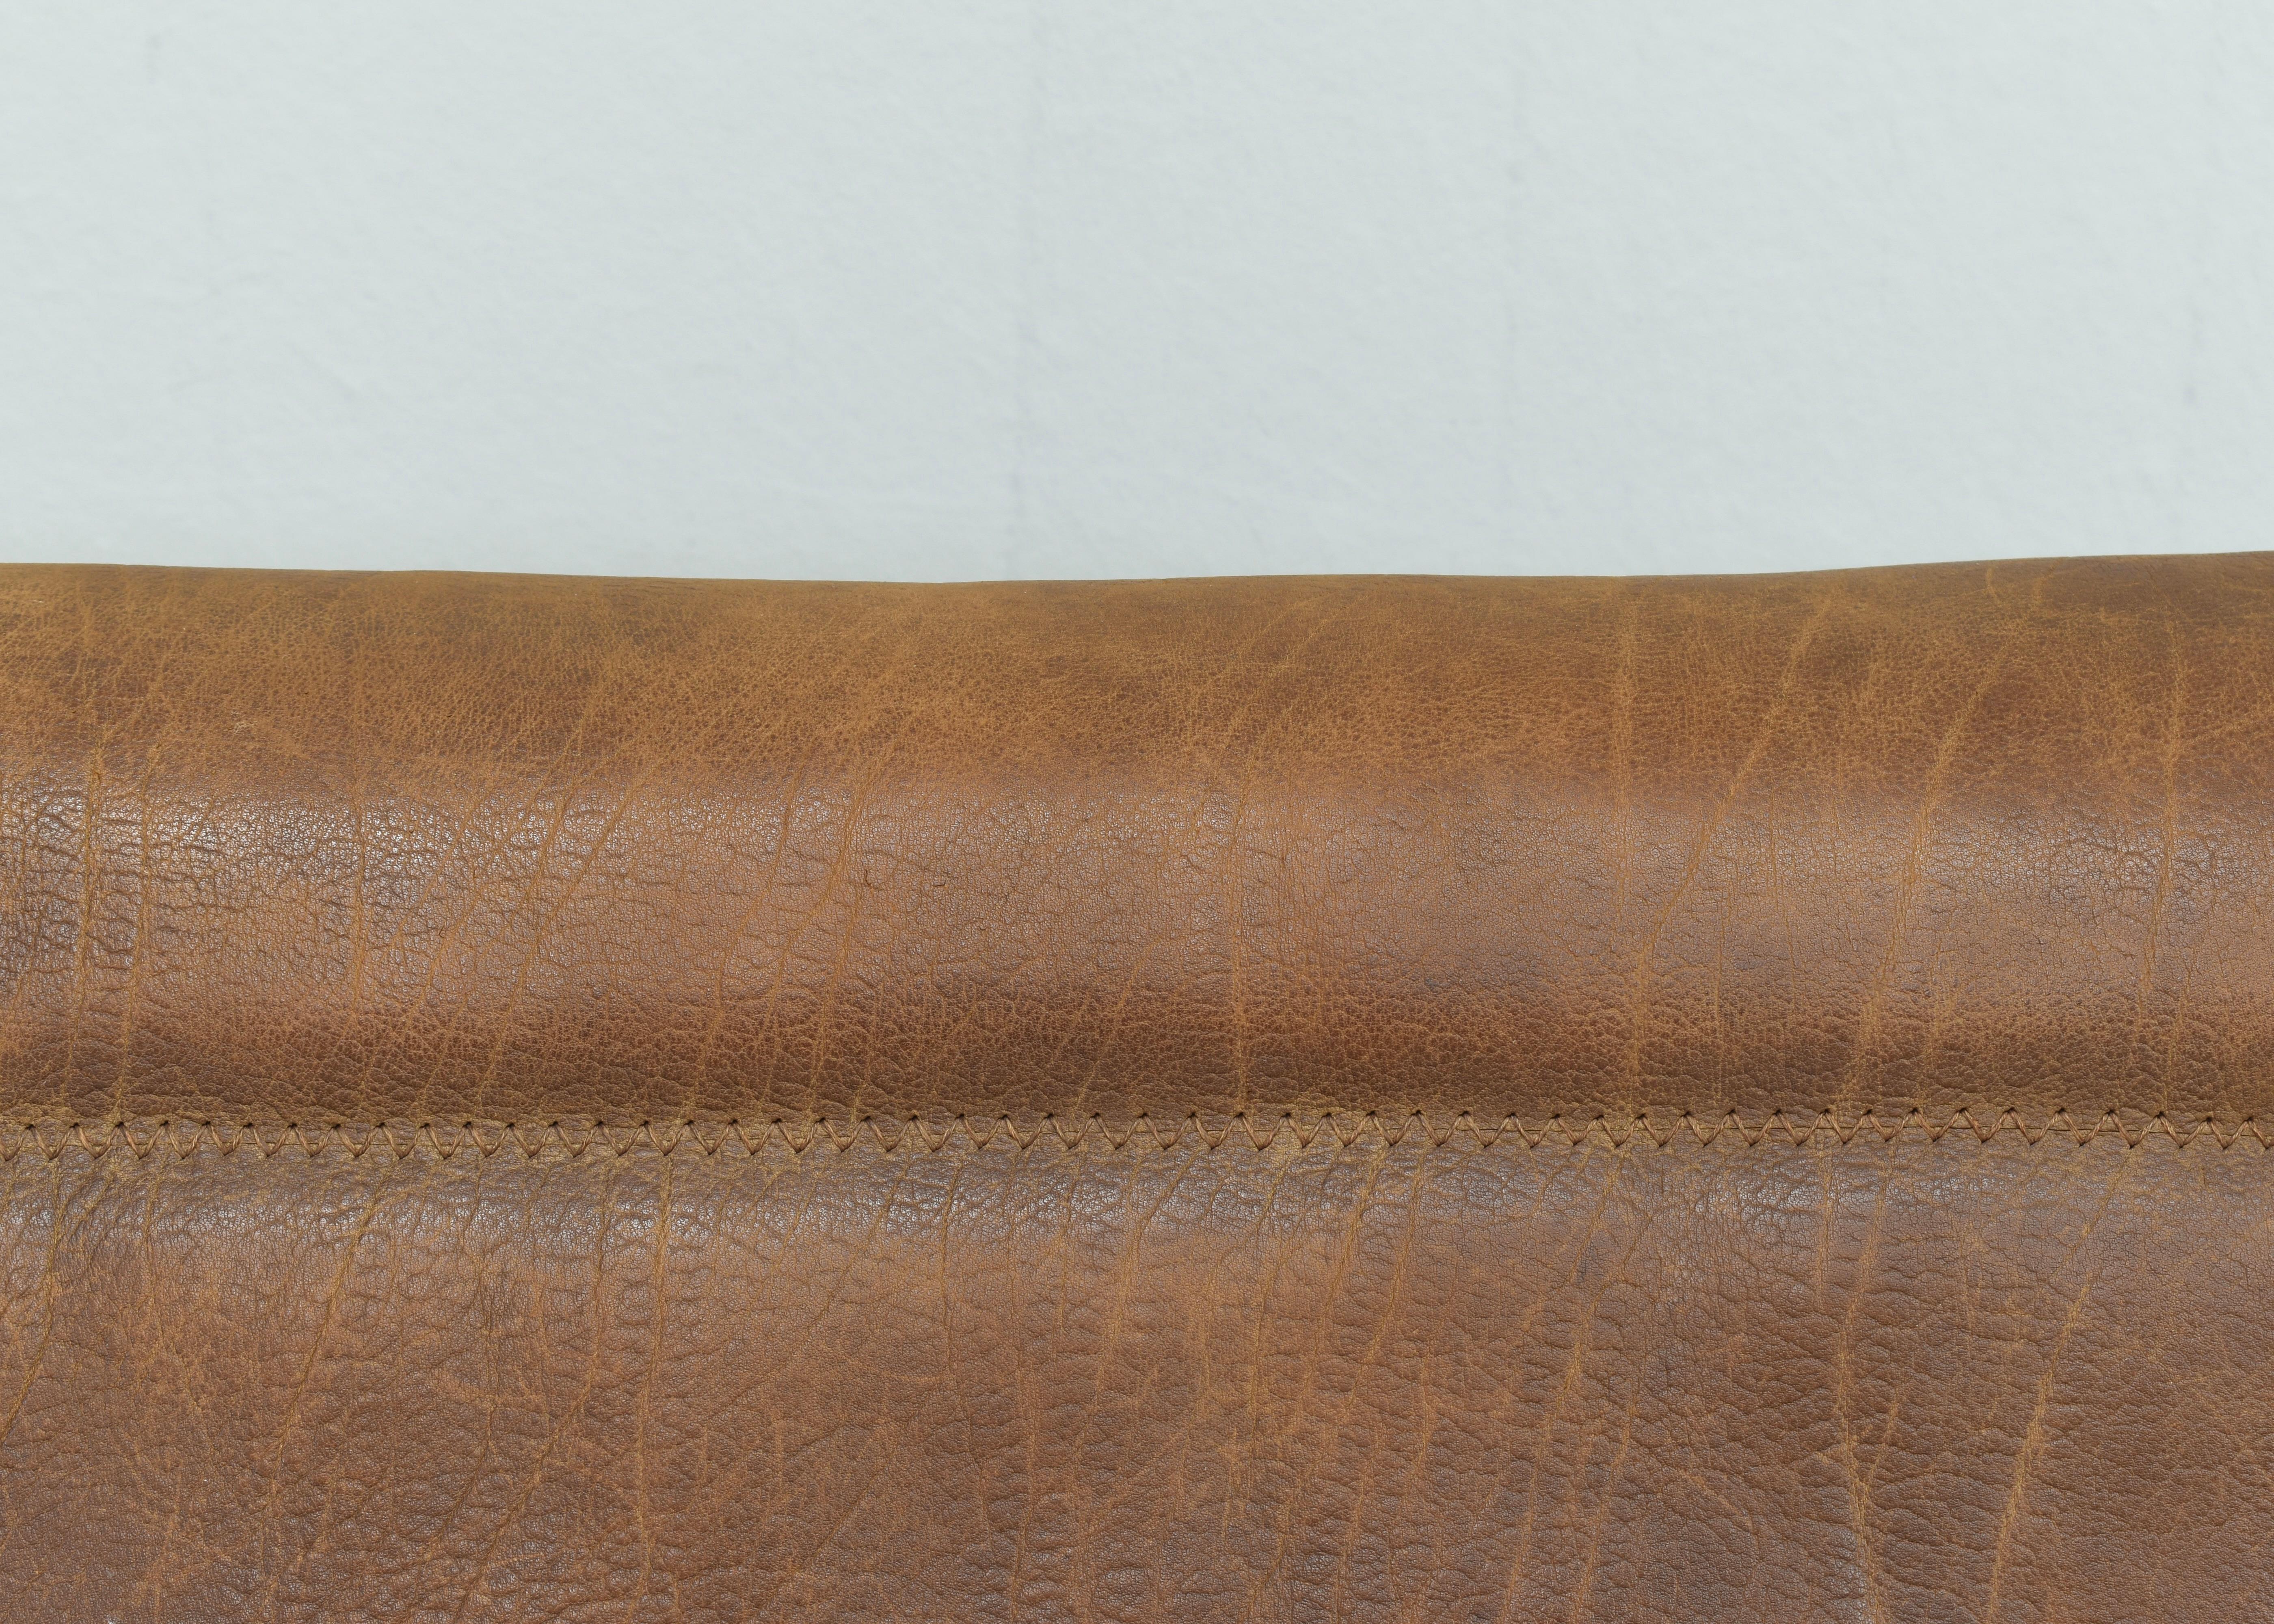 De Sede DS-84 Three seat sofa in Tan Buffalo leather – Switzerland, circa 1970 For Sale 7